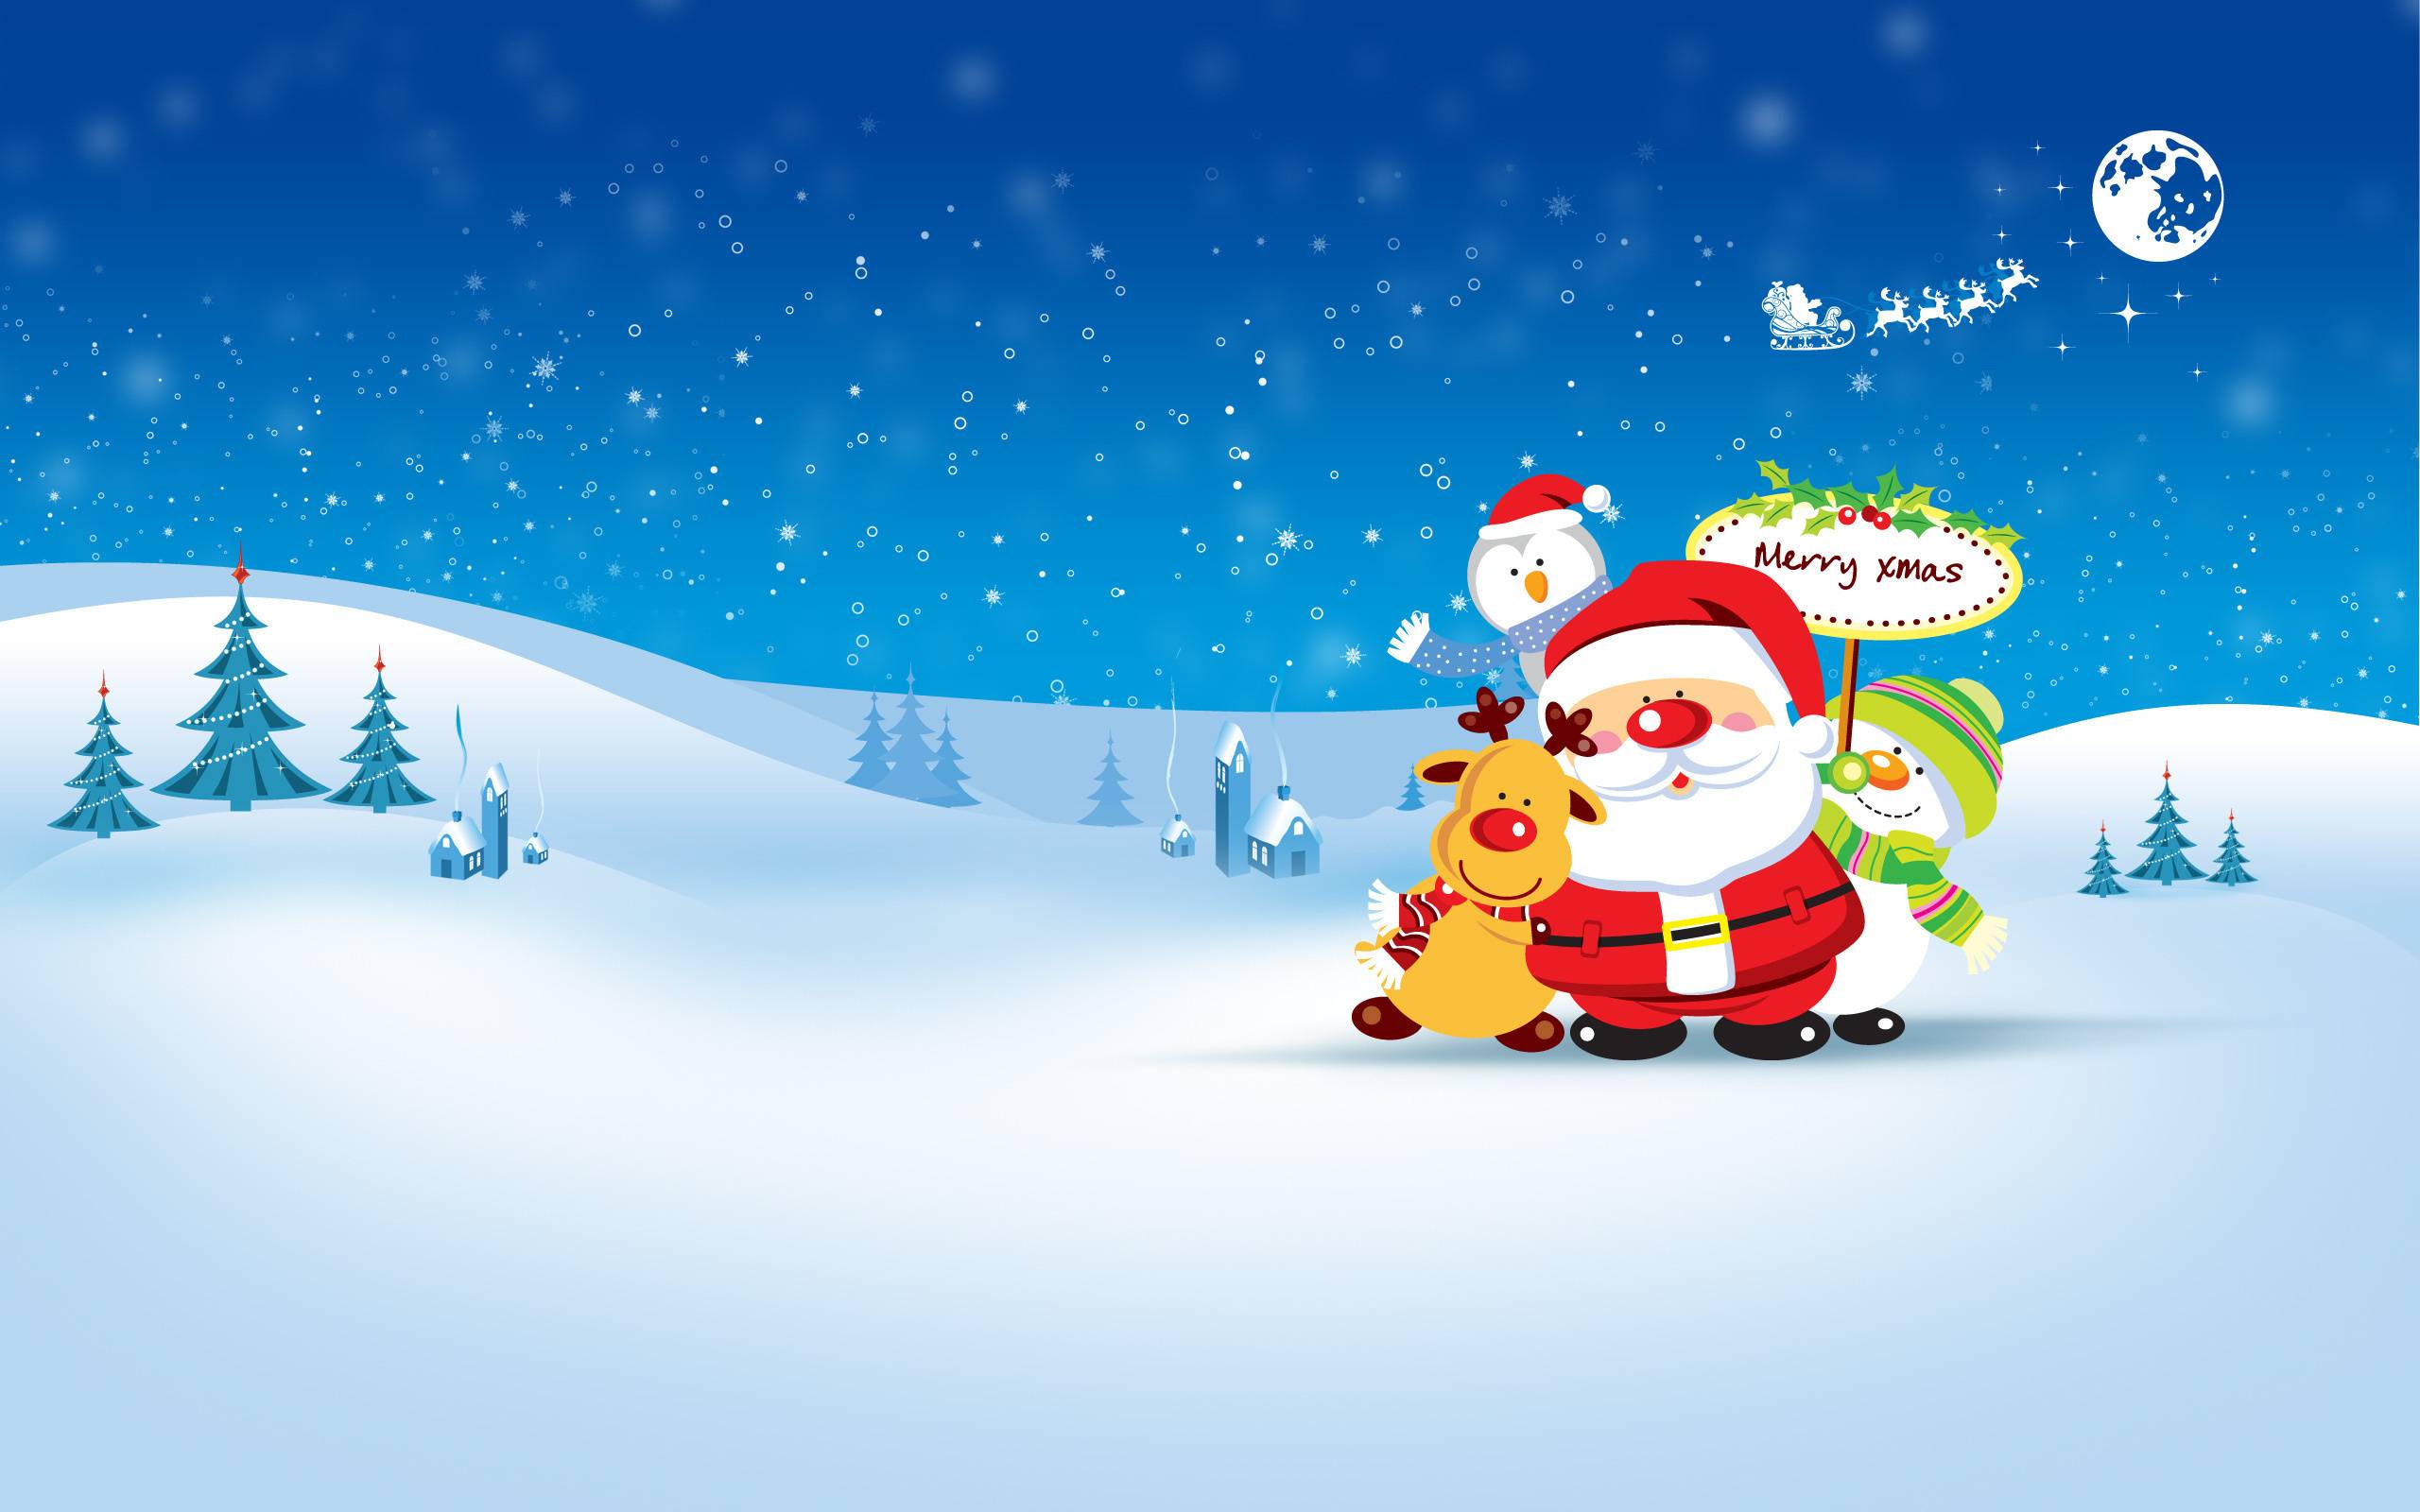 Merry Xmas From Santa And Friends 高清壁纸 桌面背景 2560x1600 Id 644783 Wallpaper Abyss